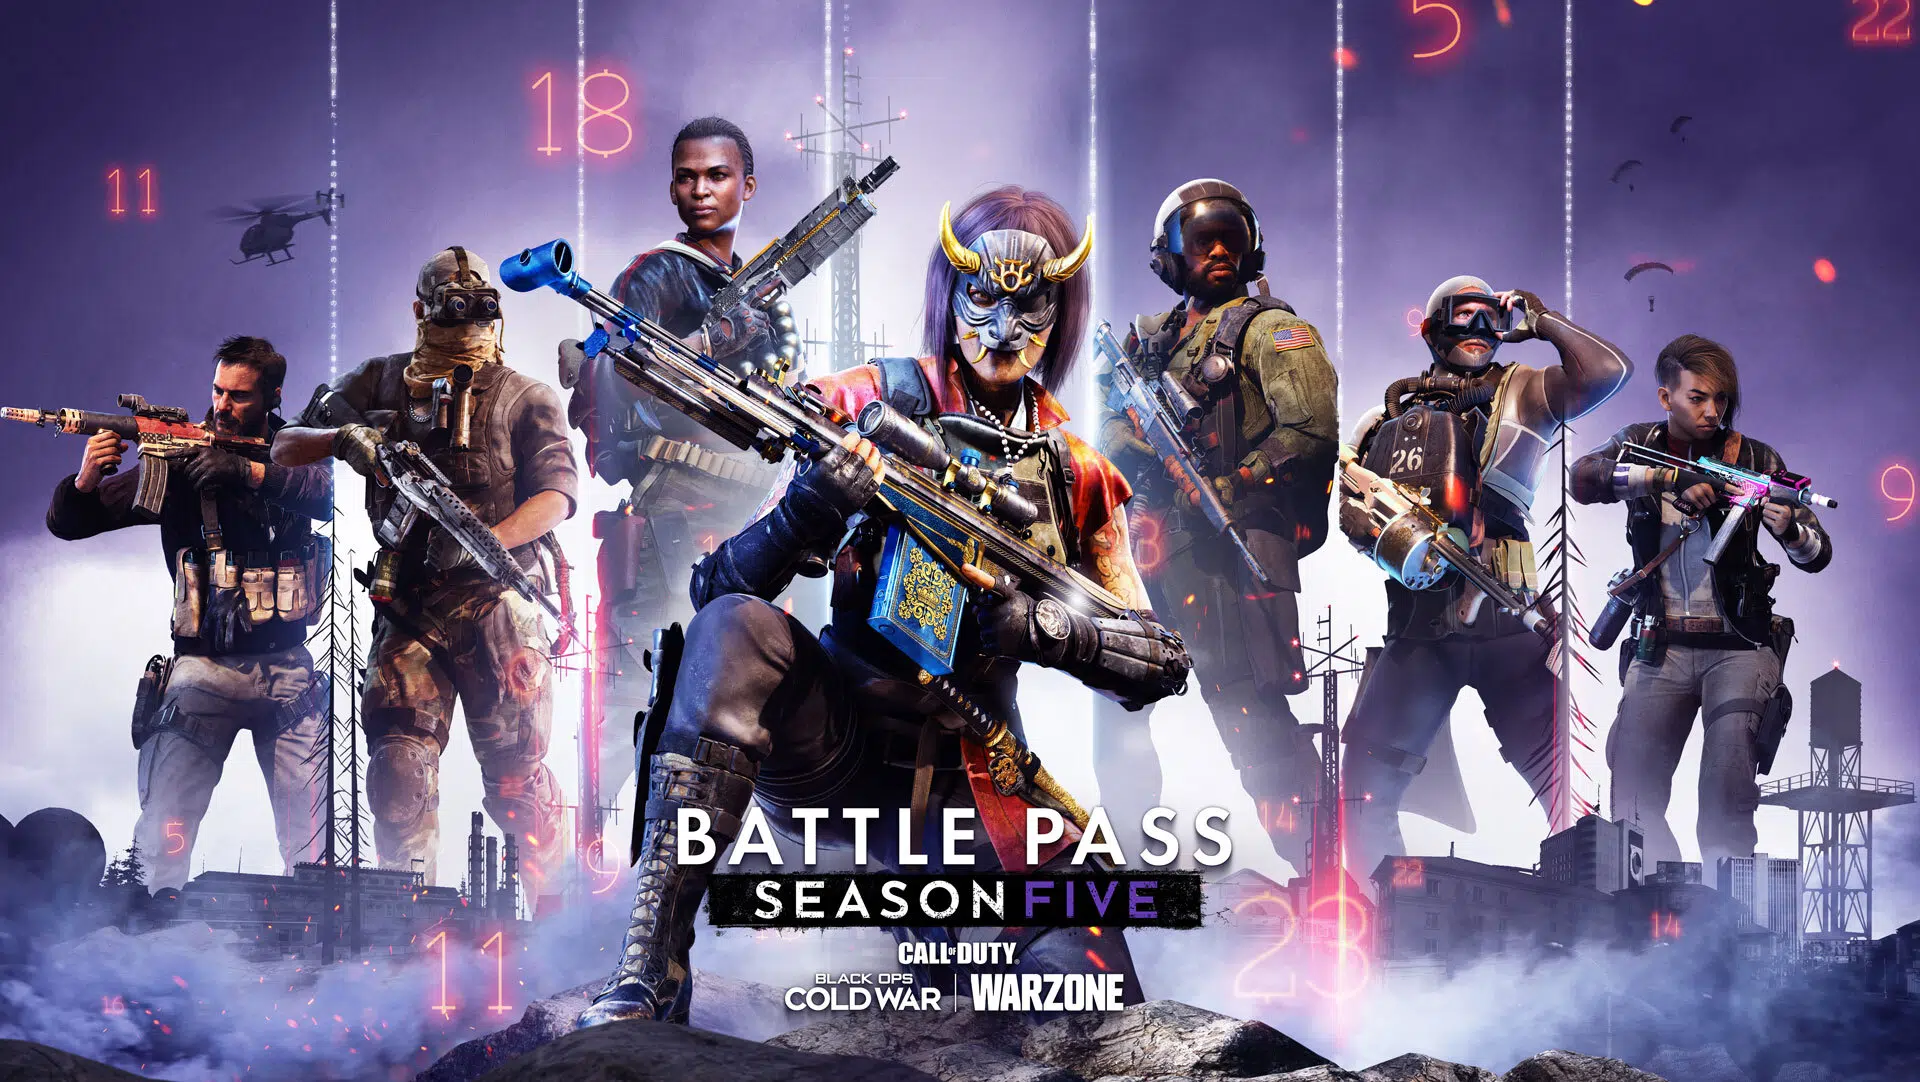 Warzone Season 5 Battle Pass